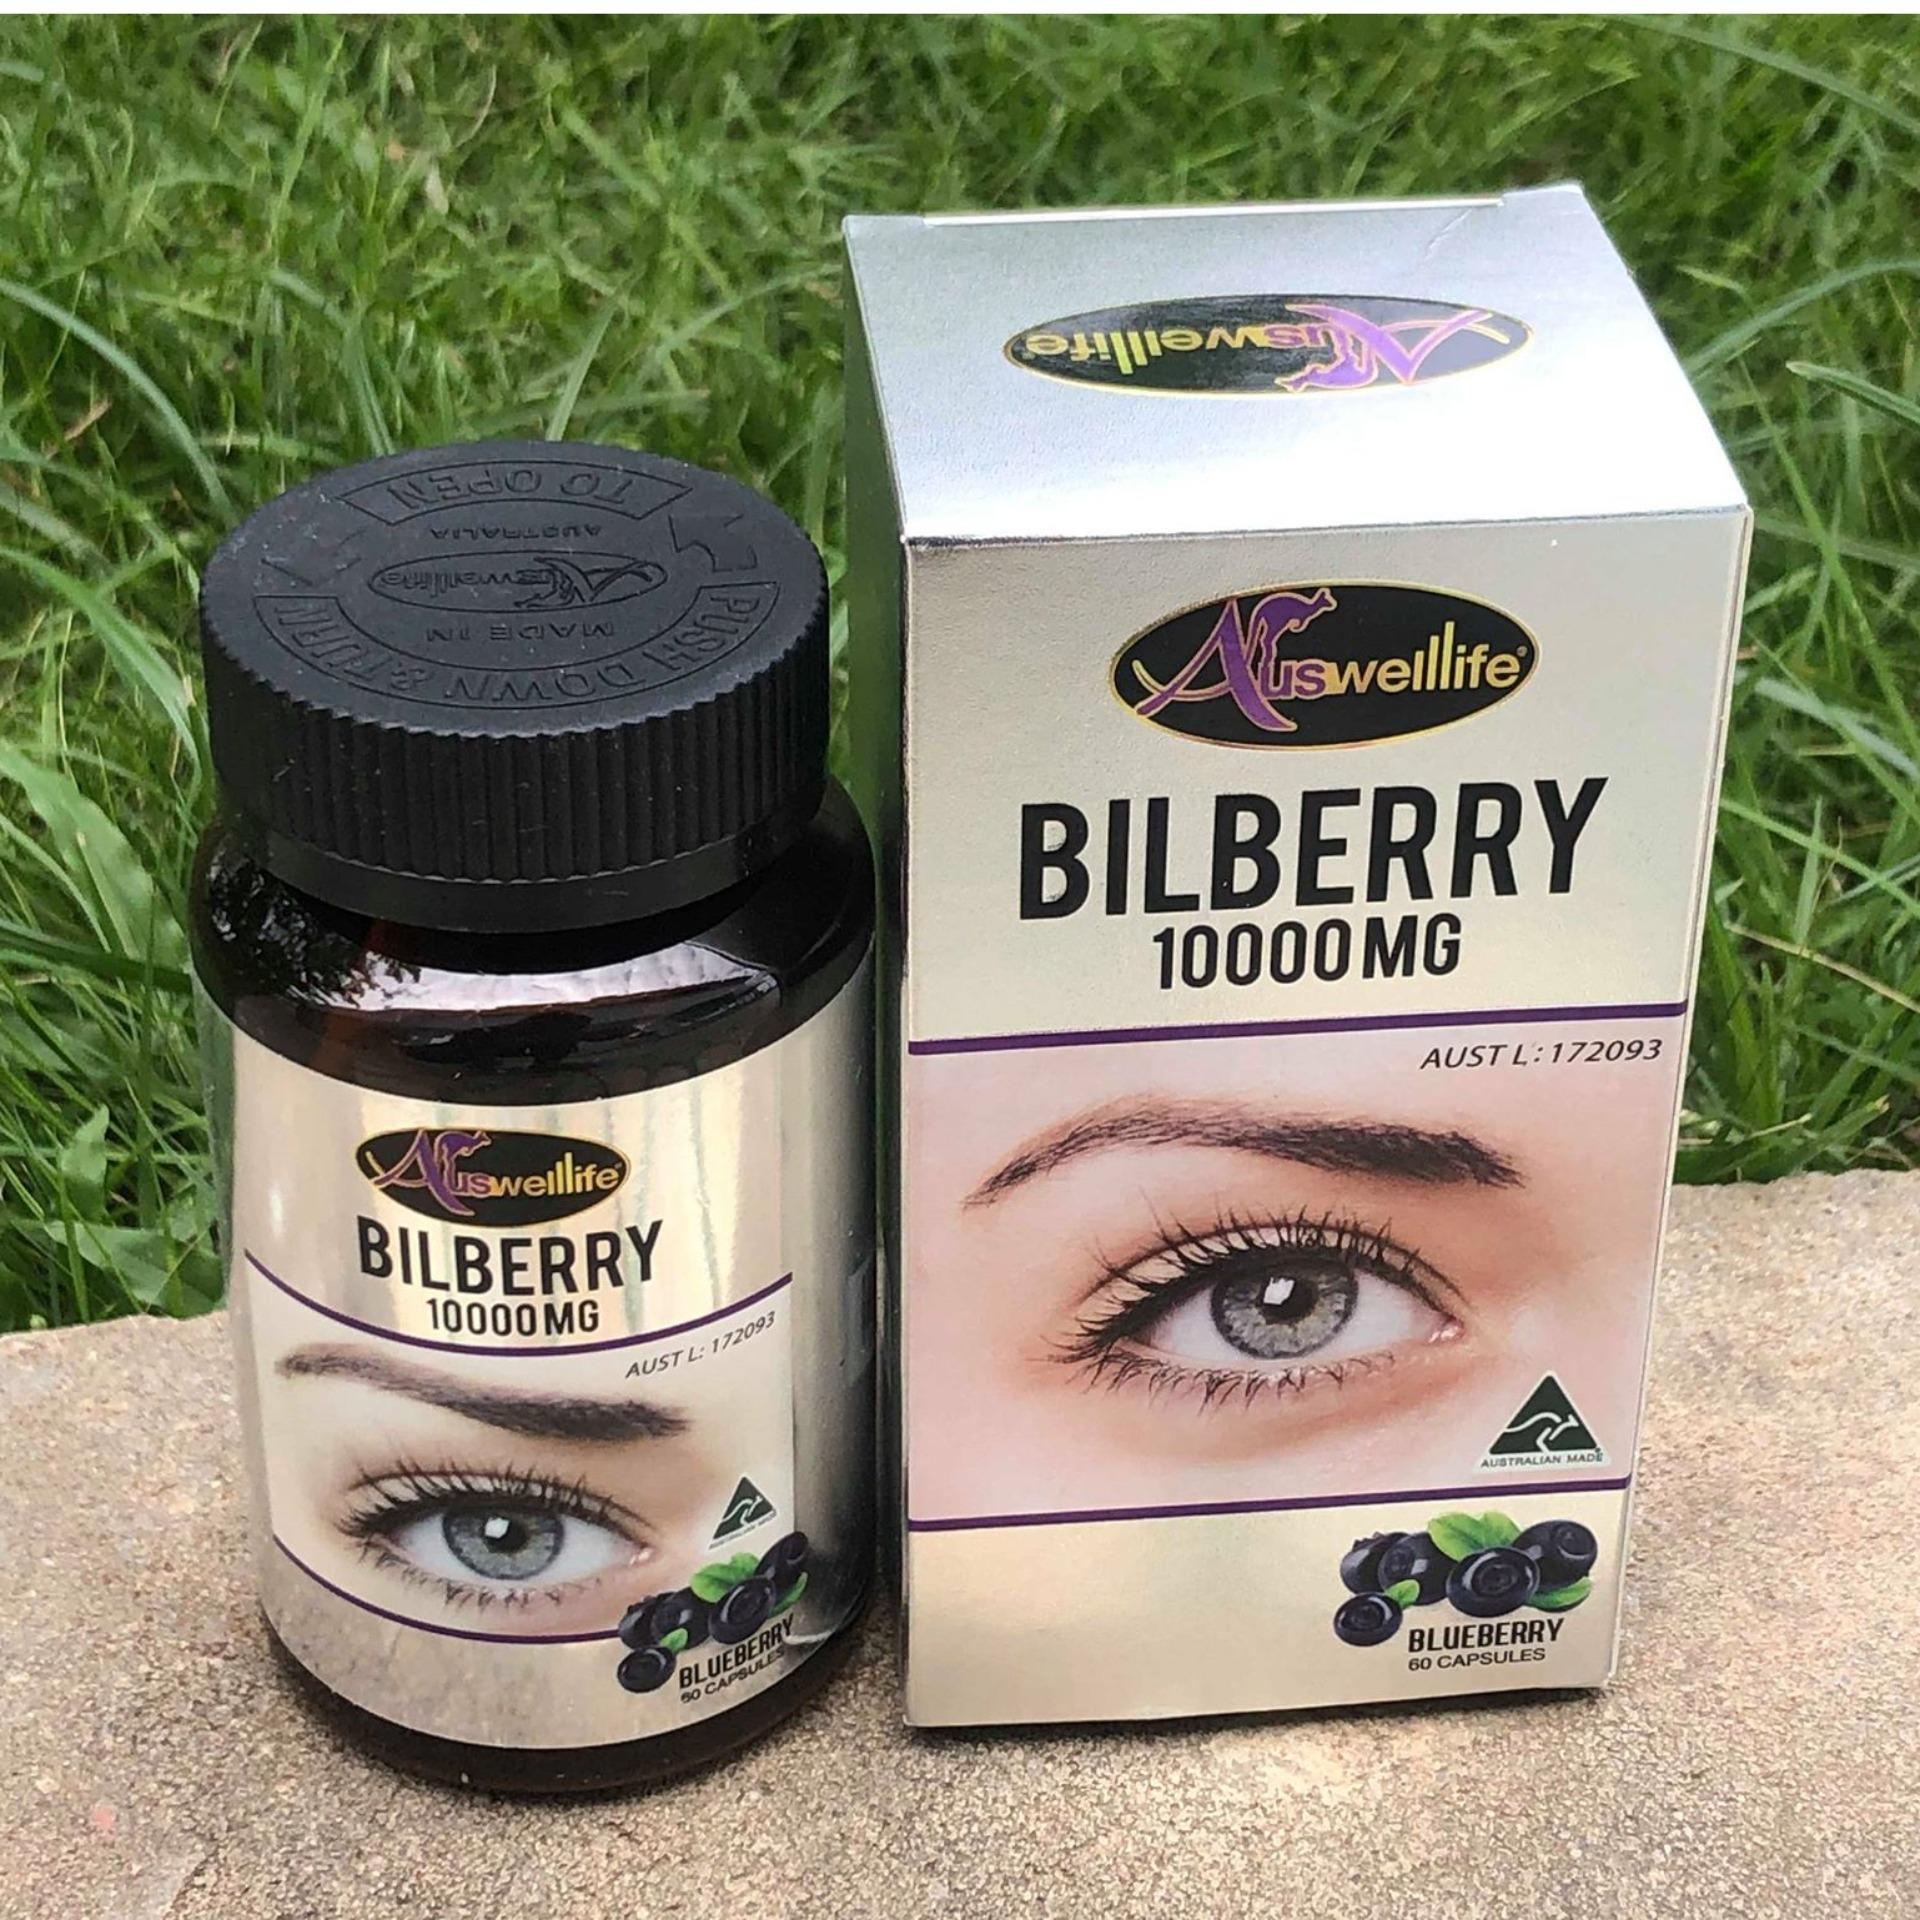 Auswelllife Bilberry ออสเวลล์ไลฟ์ บิลเบอร์รี่ 10000 mg. อาหารเสริมบำรุงสายตาเกรดพรีเมี่ยม (บรรจุ 60 แคปซูล ทานได้ 2 เดือน)